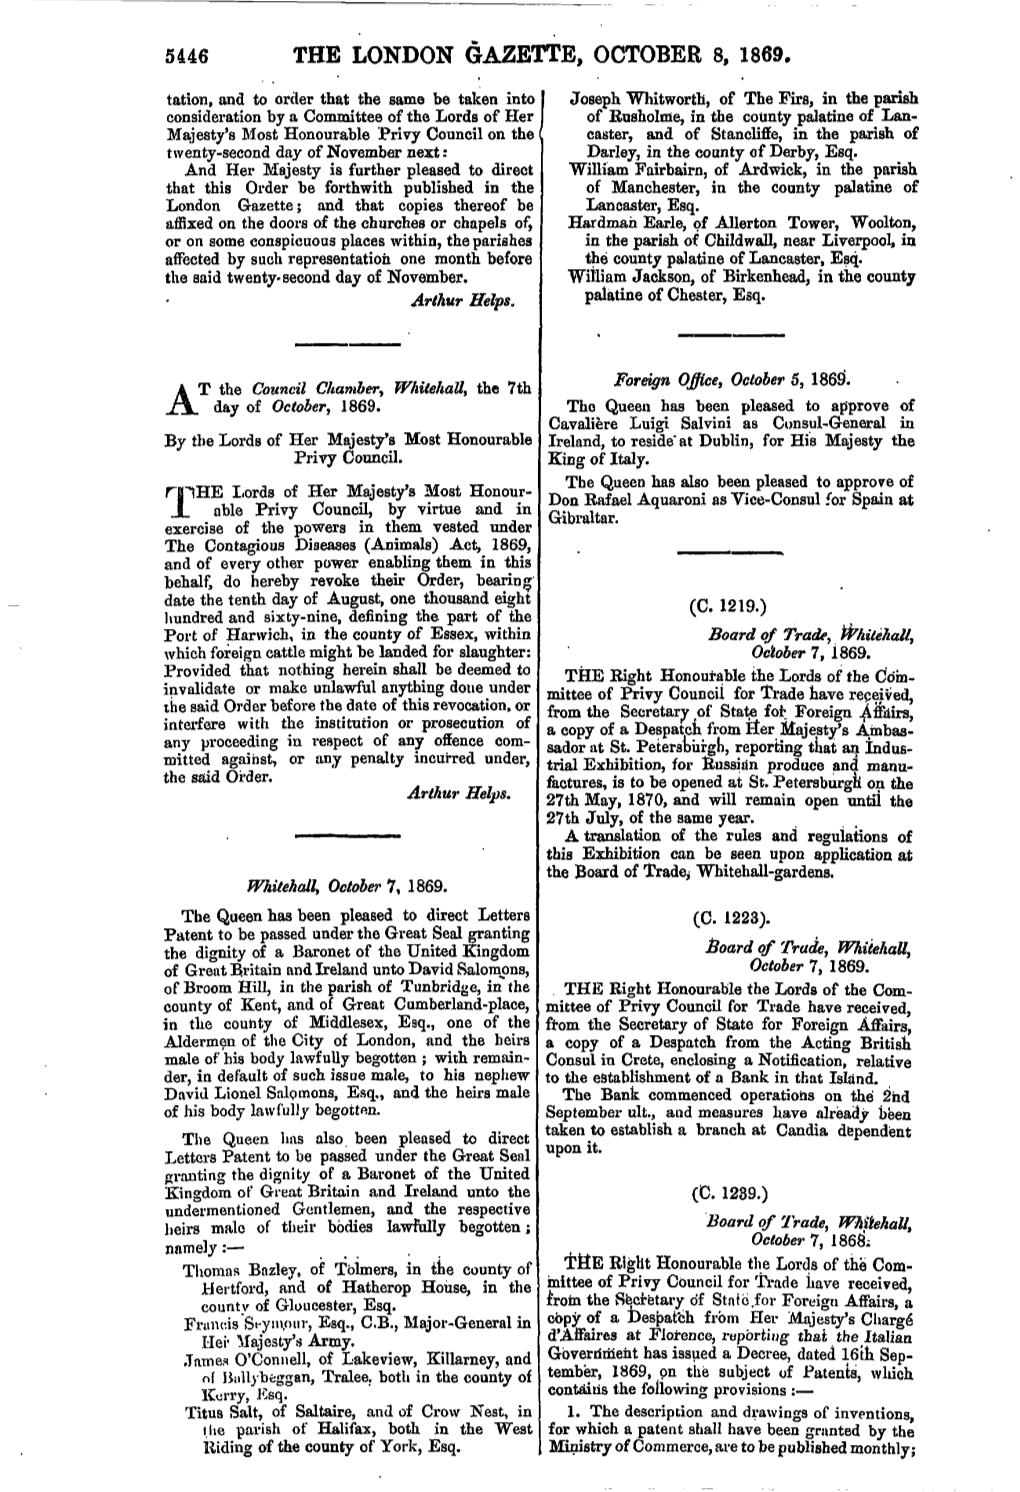 The London Gazette, October 8, 1869